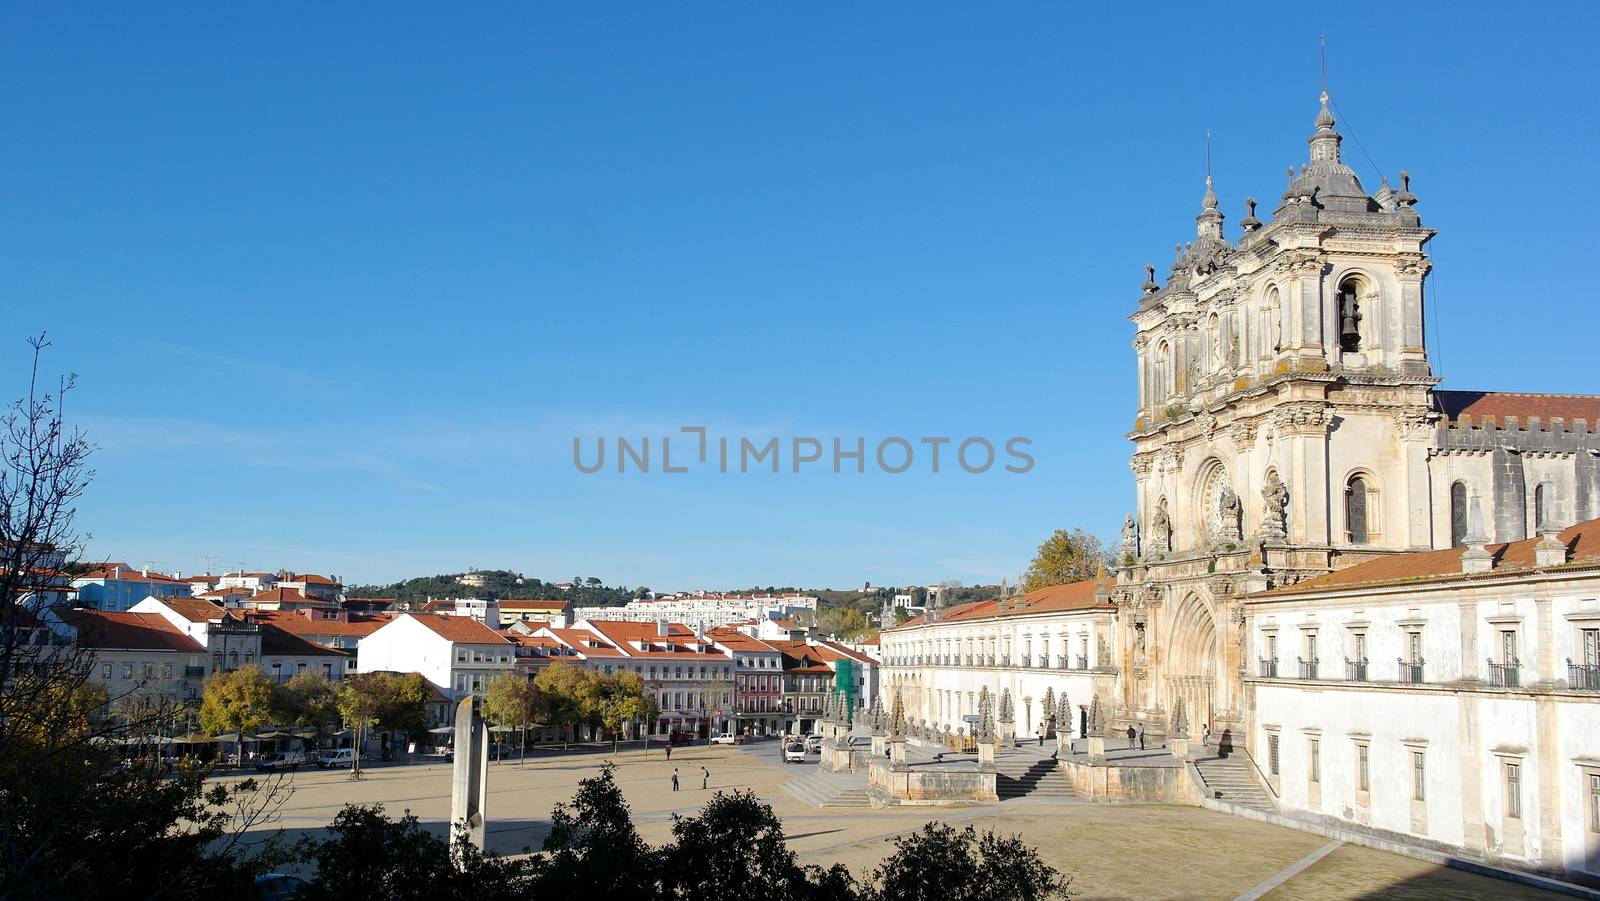 Monastery of Alcobaca, Alcobaca, Portugal by tiagoladeira